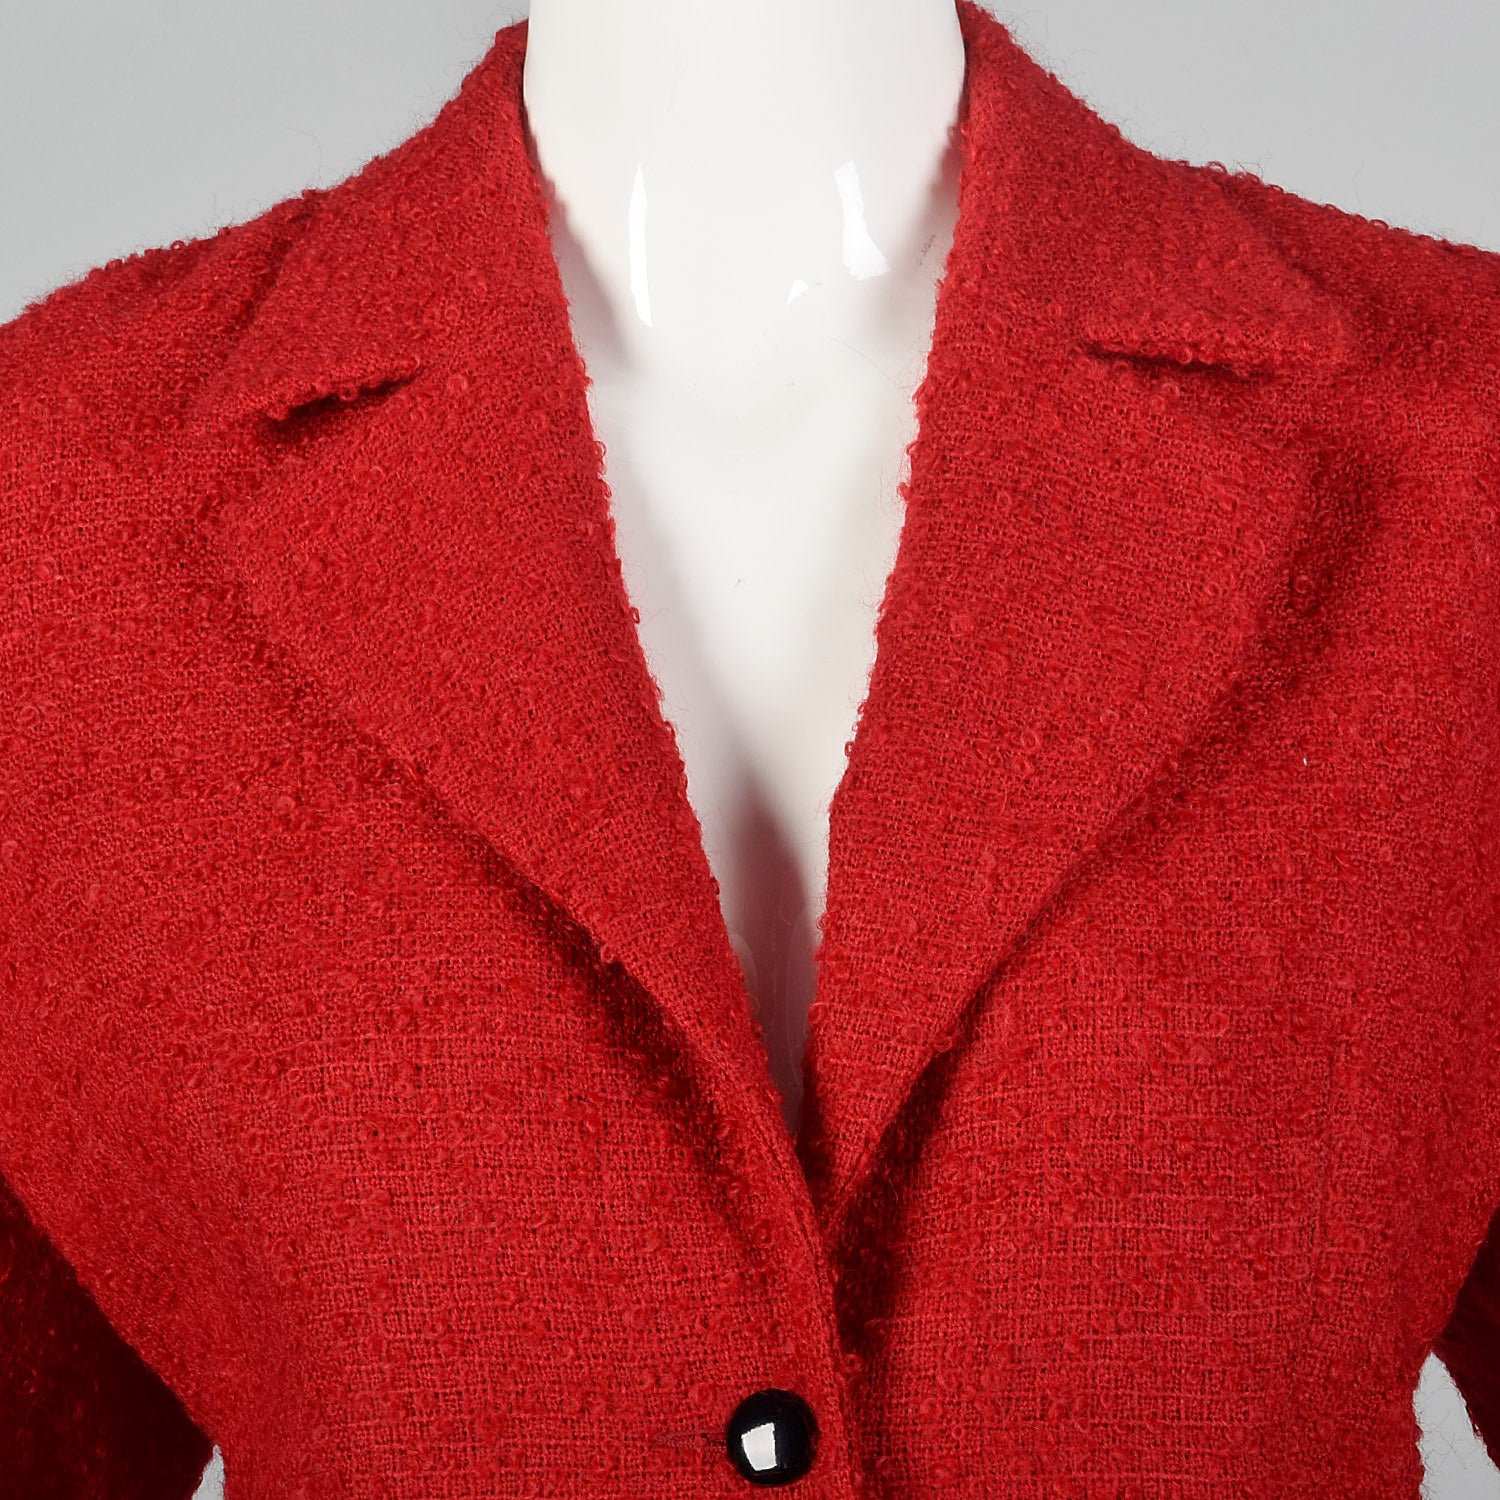 1960s Pierre Cardin Red Wool Skirt Suit